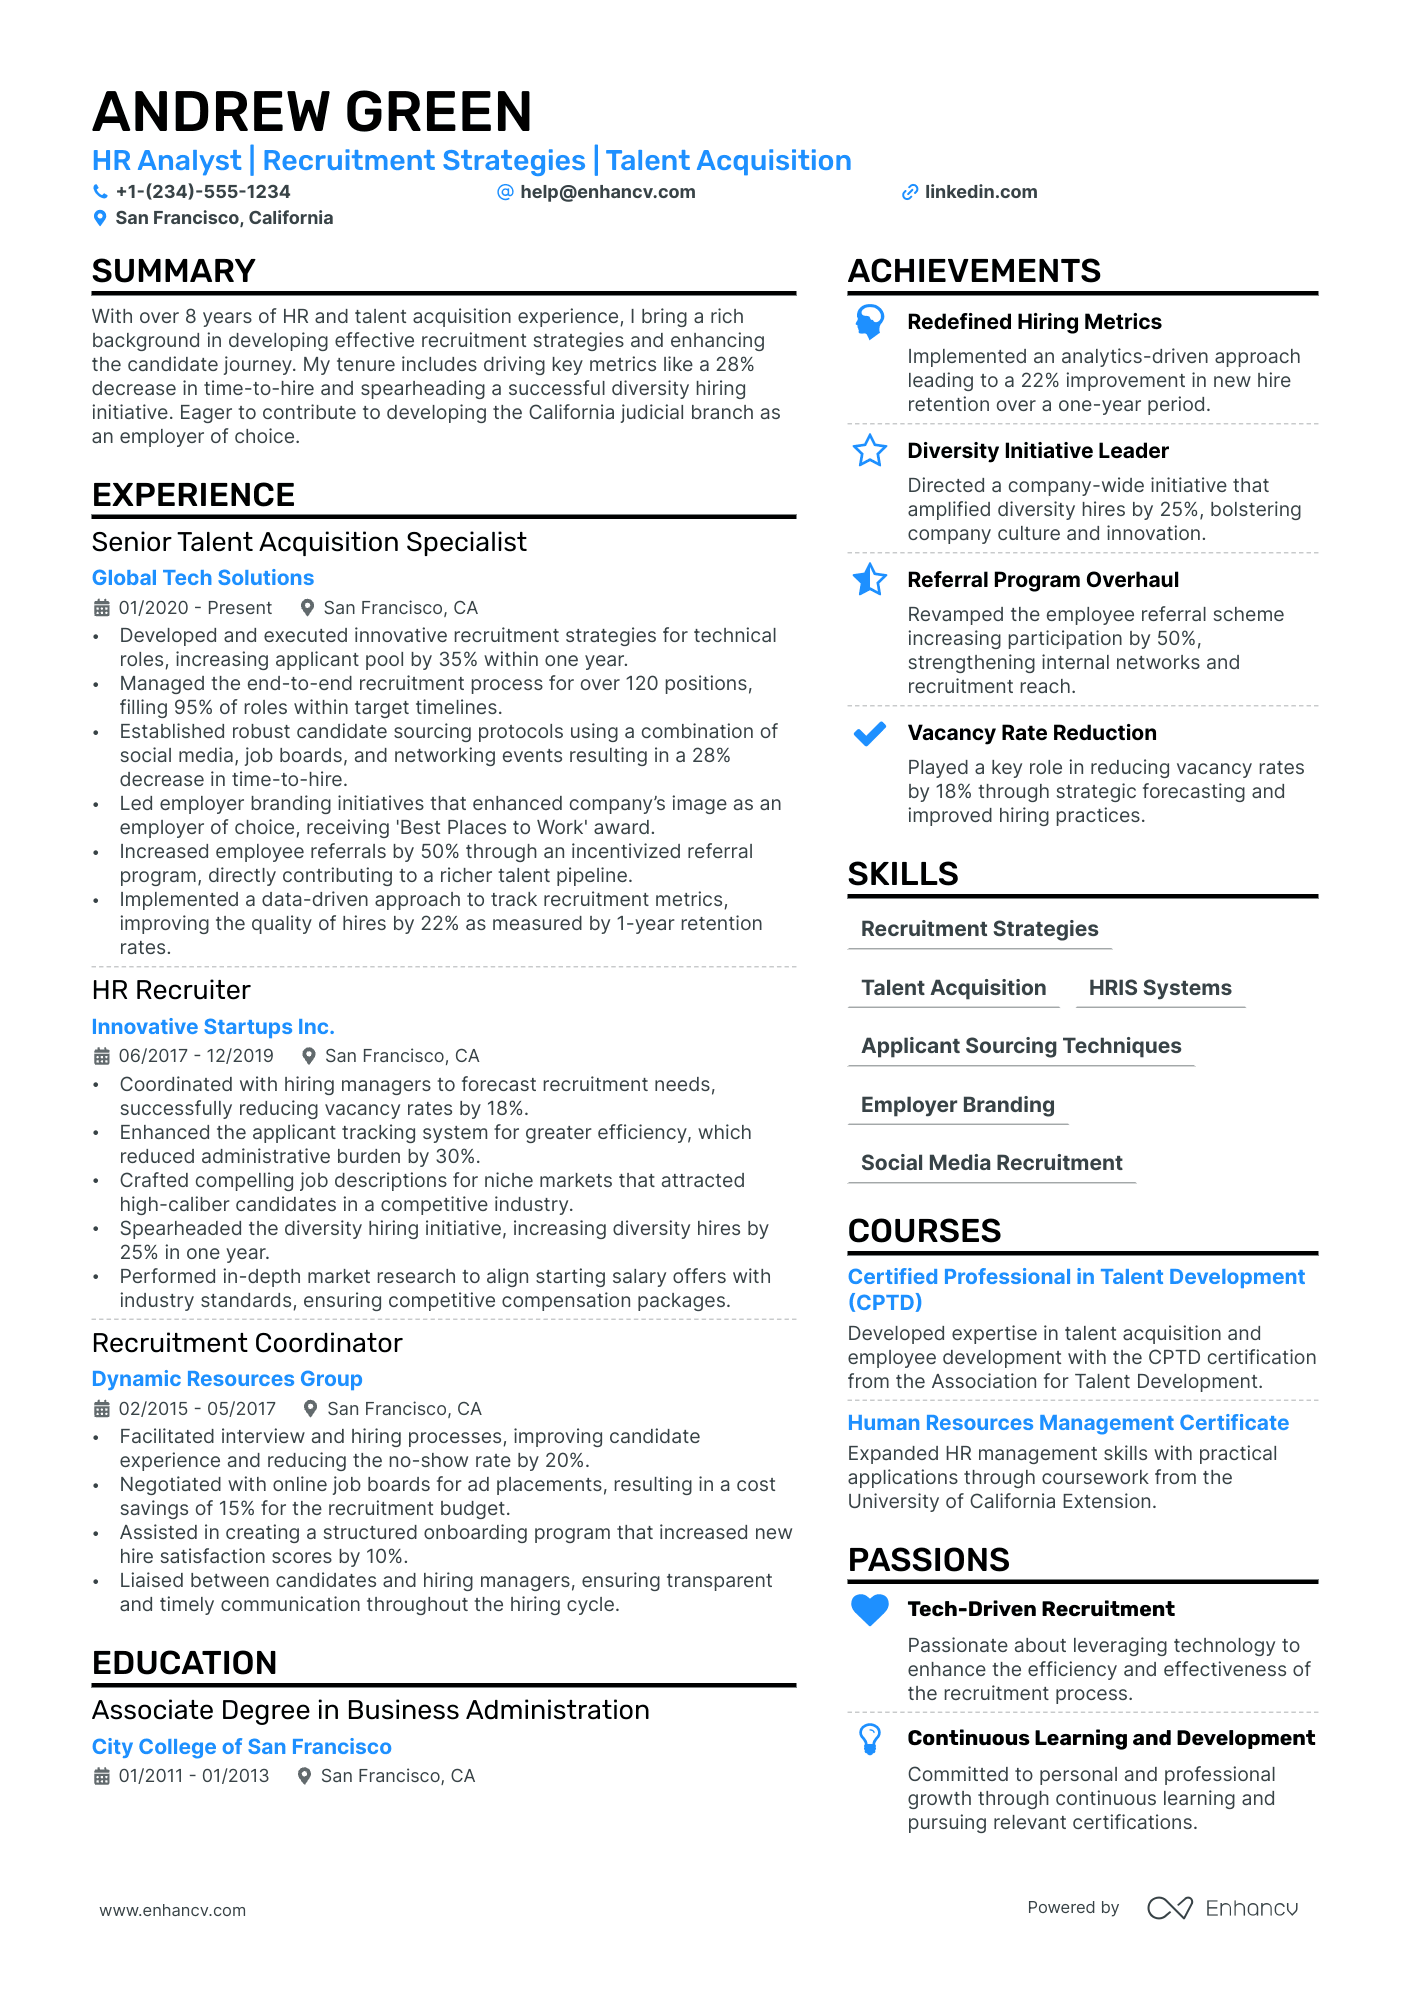 HR Analyst resume example